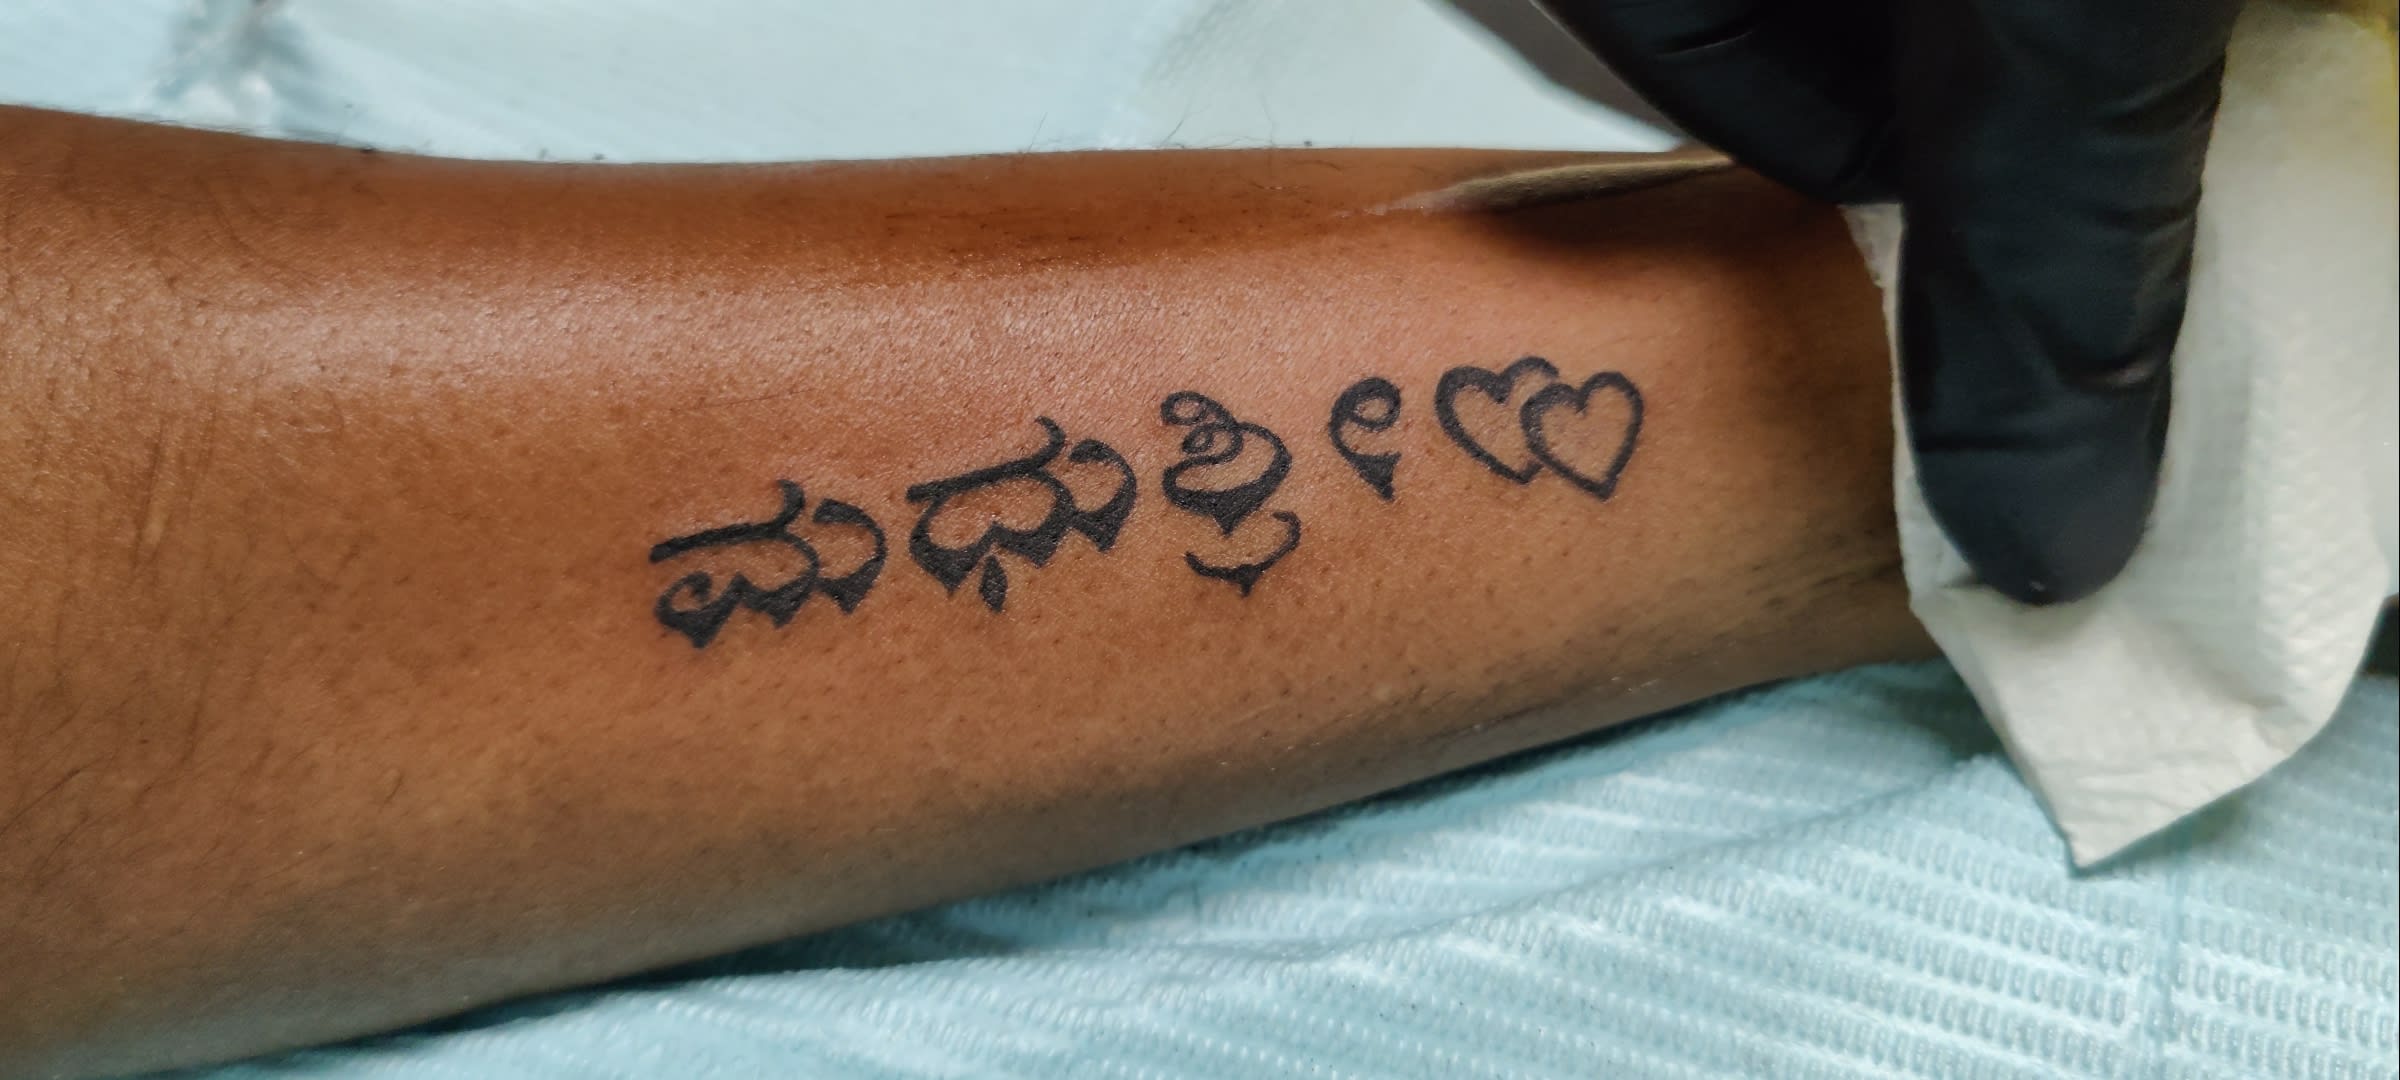 EVES Tattoos Studio - EVES Tattoo Studio Kootapalli colony Tiruchengode  9994899014 #tamiltattoo #tiruchengode #tattoos #hubby #love #lovers #wife  #madeformore #tamilnadu #namakkal #bikers #instatattoo | Facebook